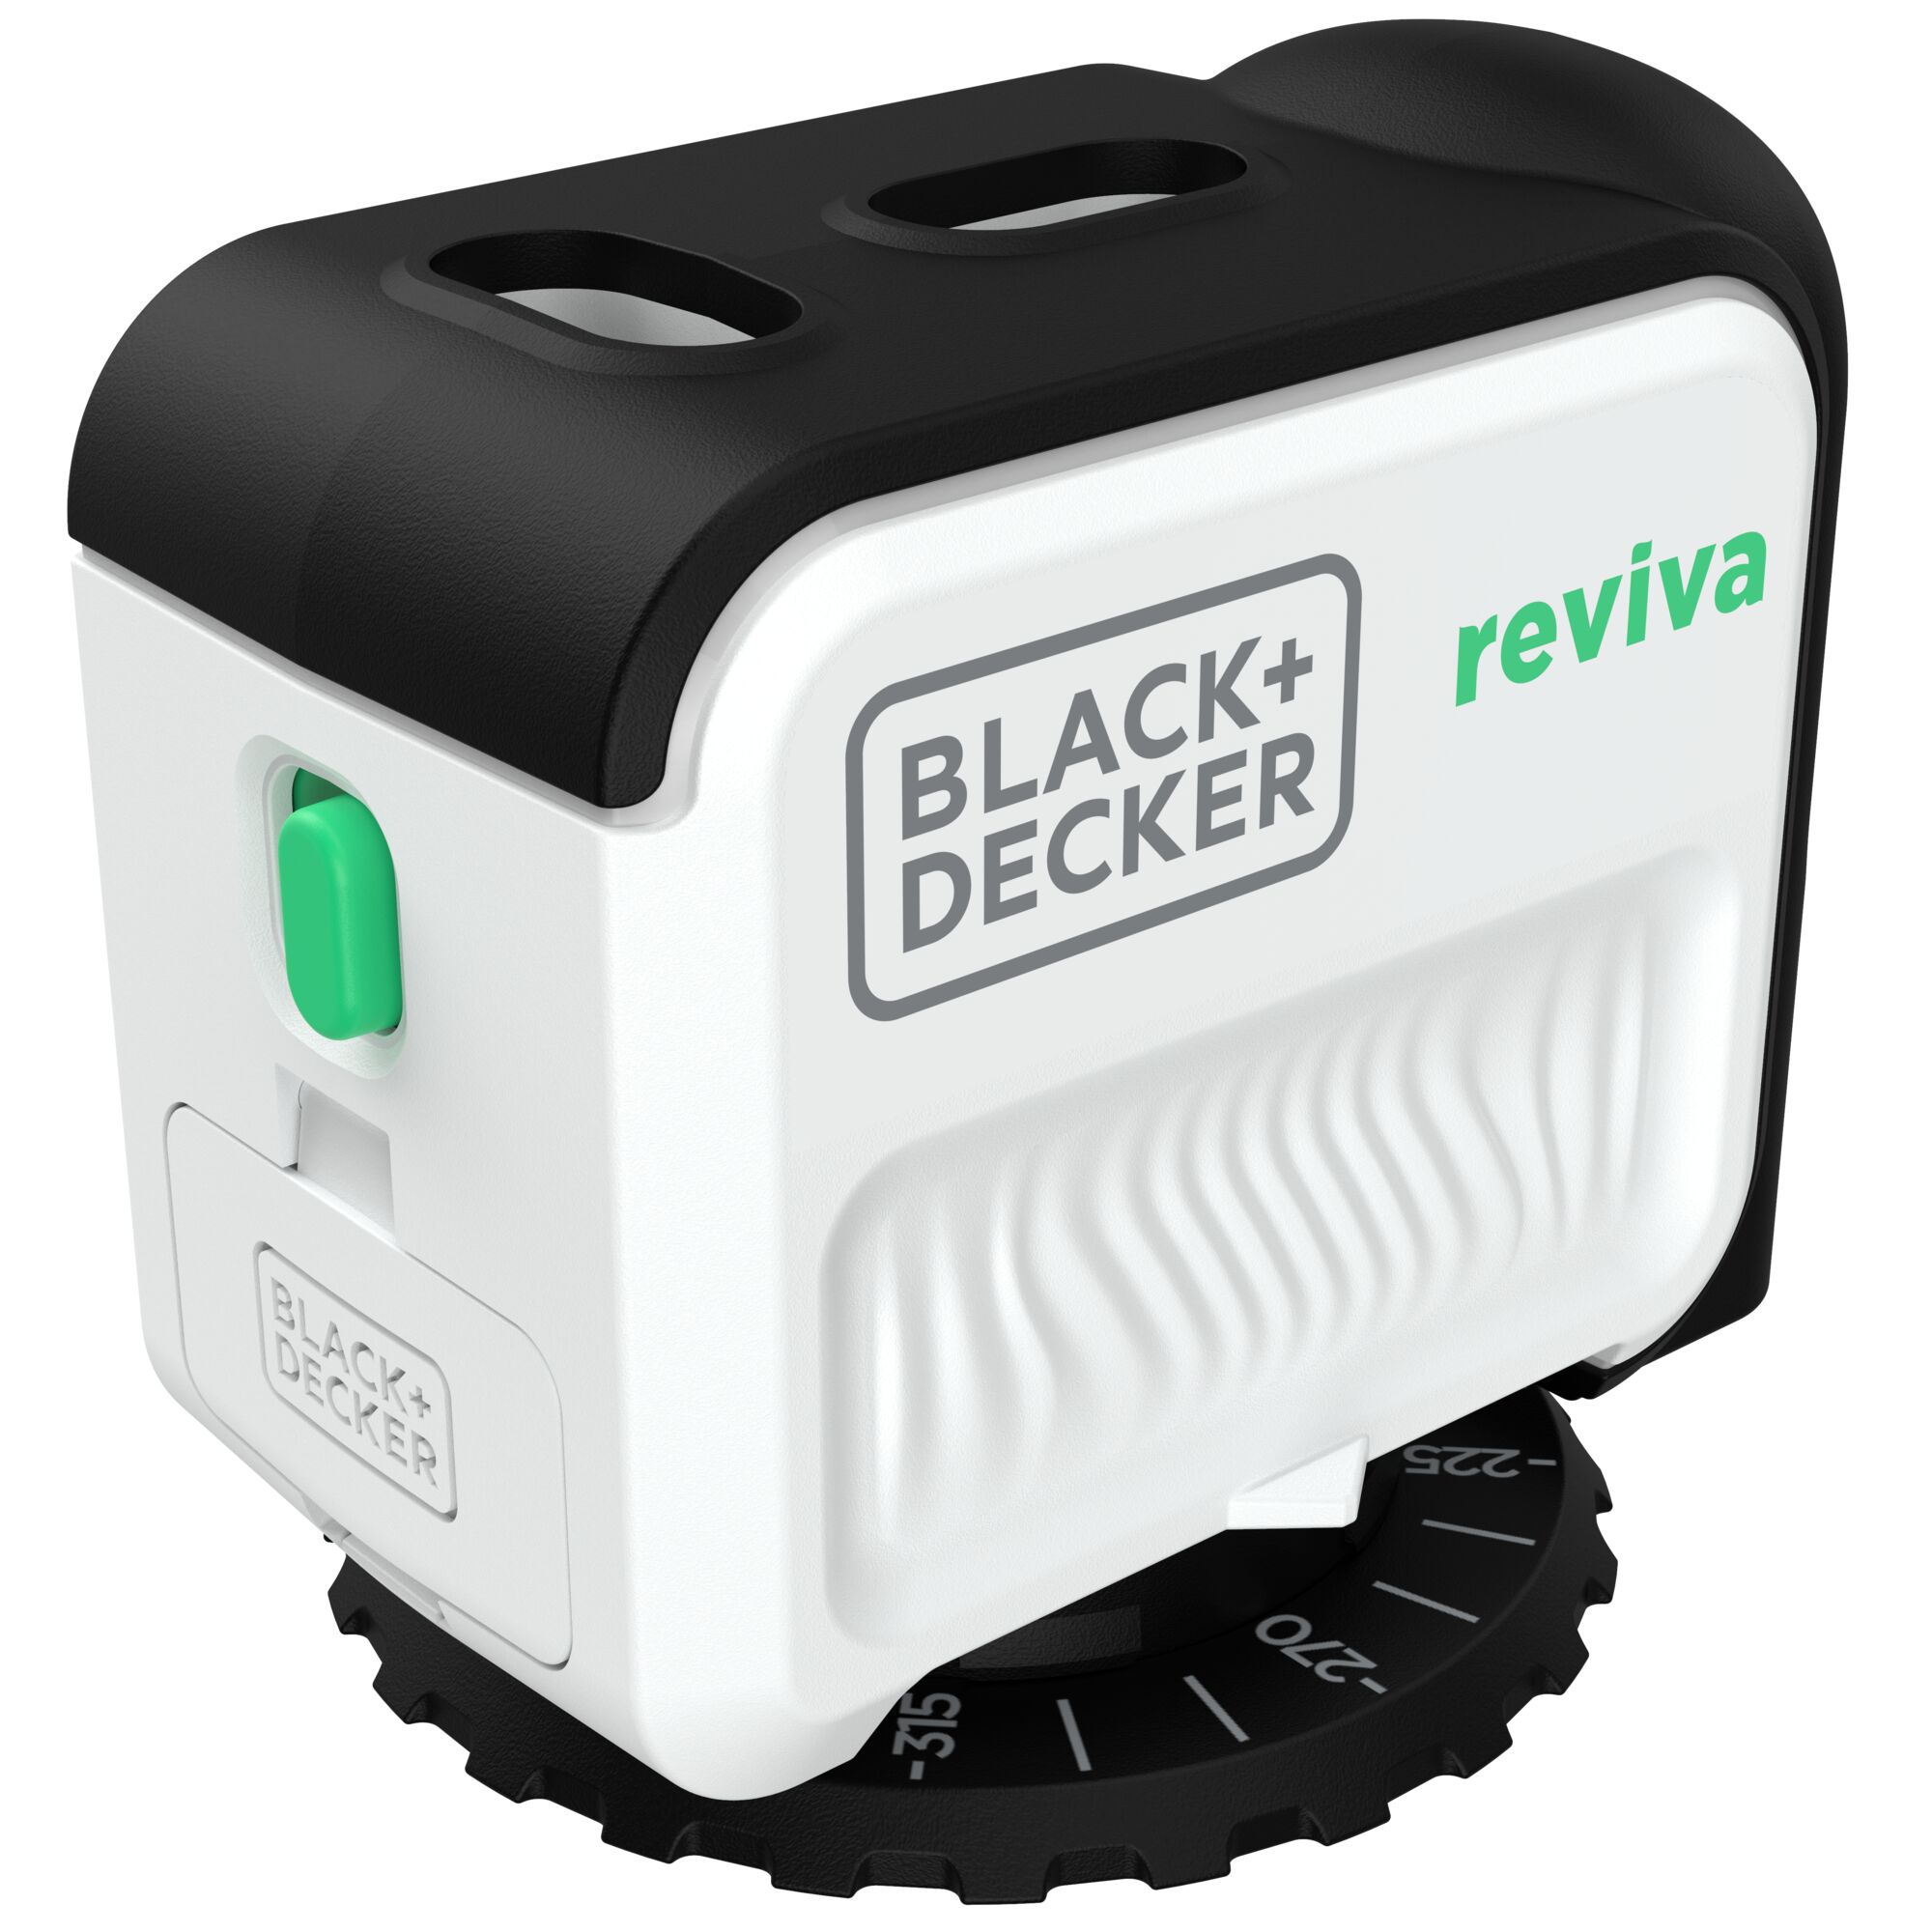 BLACK+DECKER reviva™ Line Laser  side back view showing off/on switch